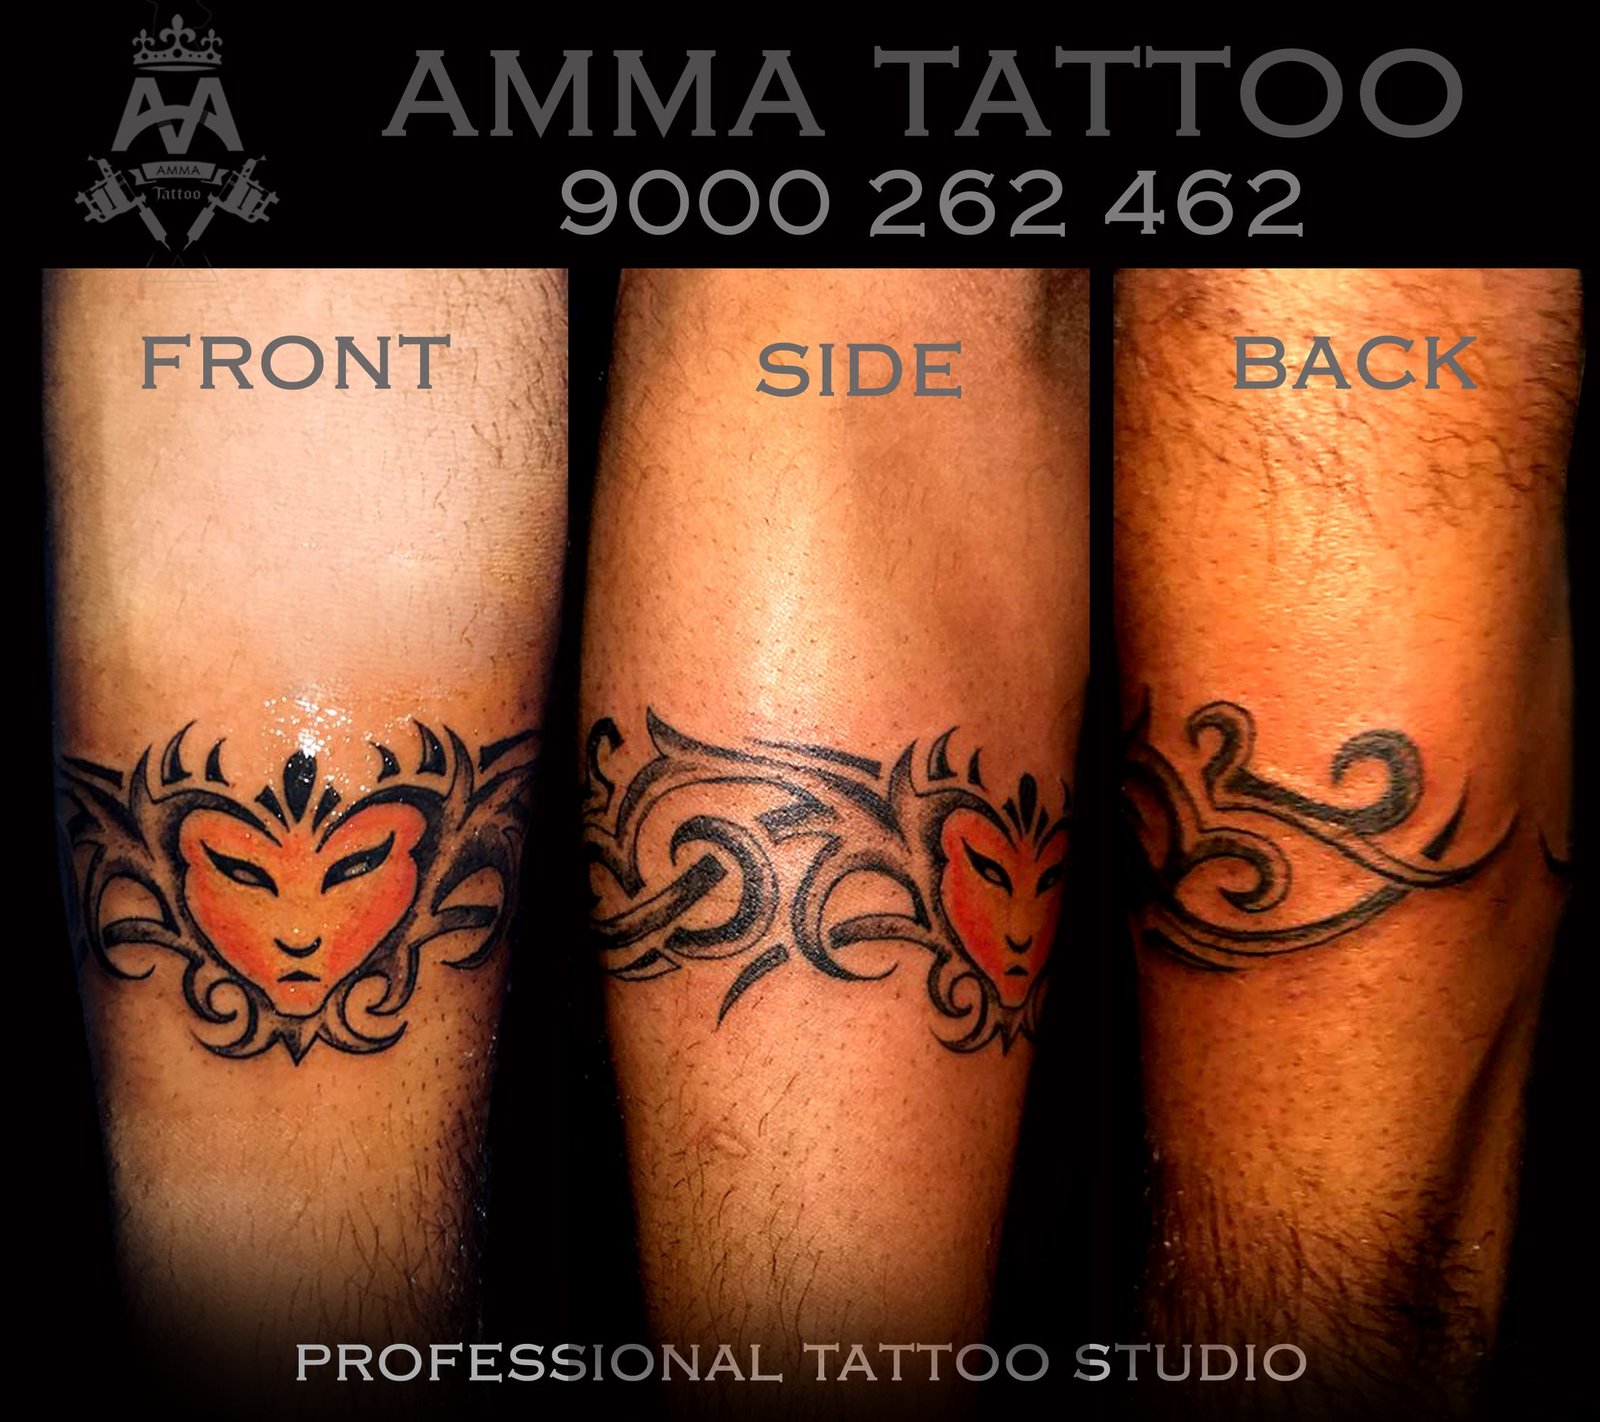 Amma Tattoo Reviews, Stadium Road, Rajahmundry - 1147 Ratings - Justdial